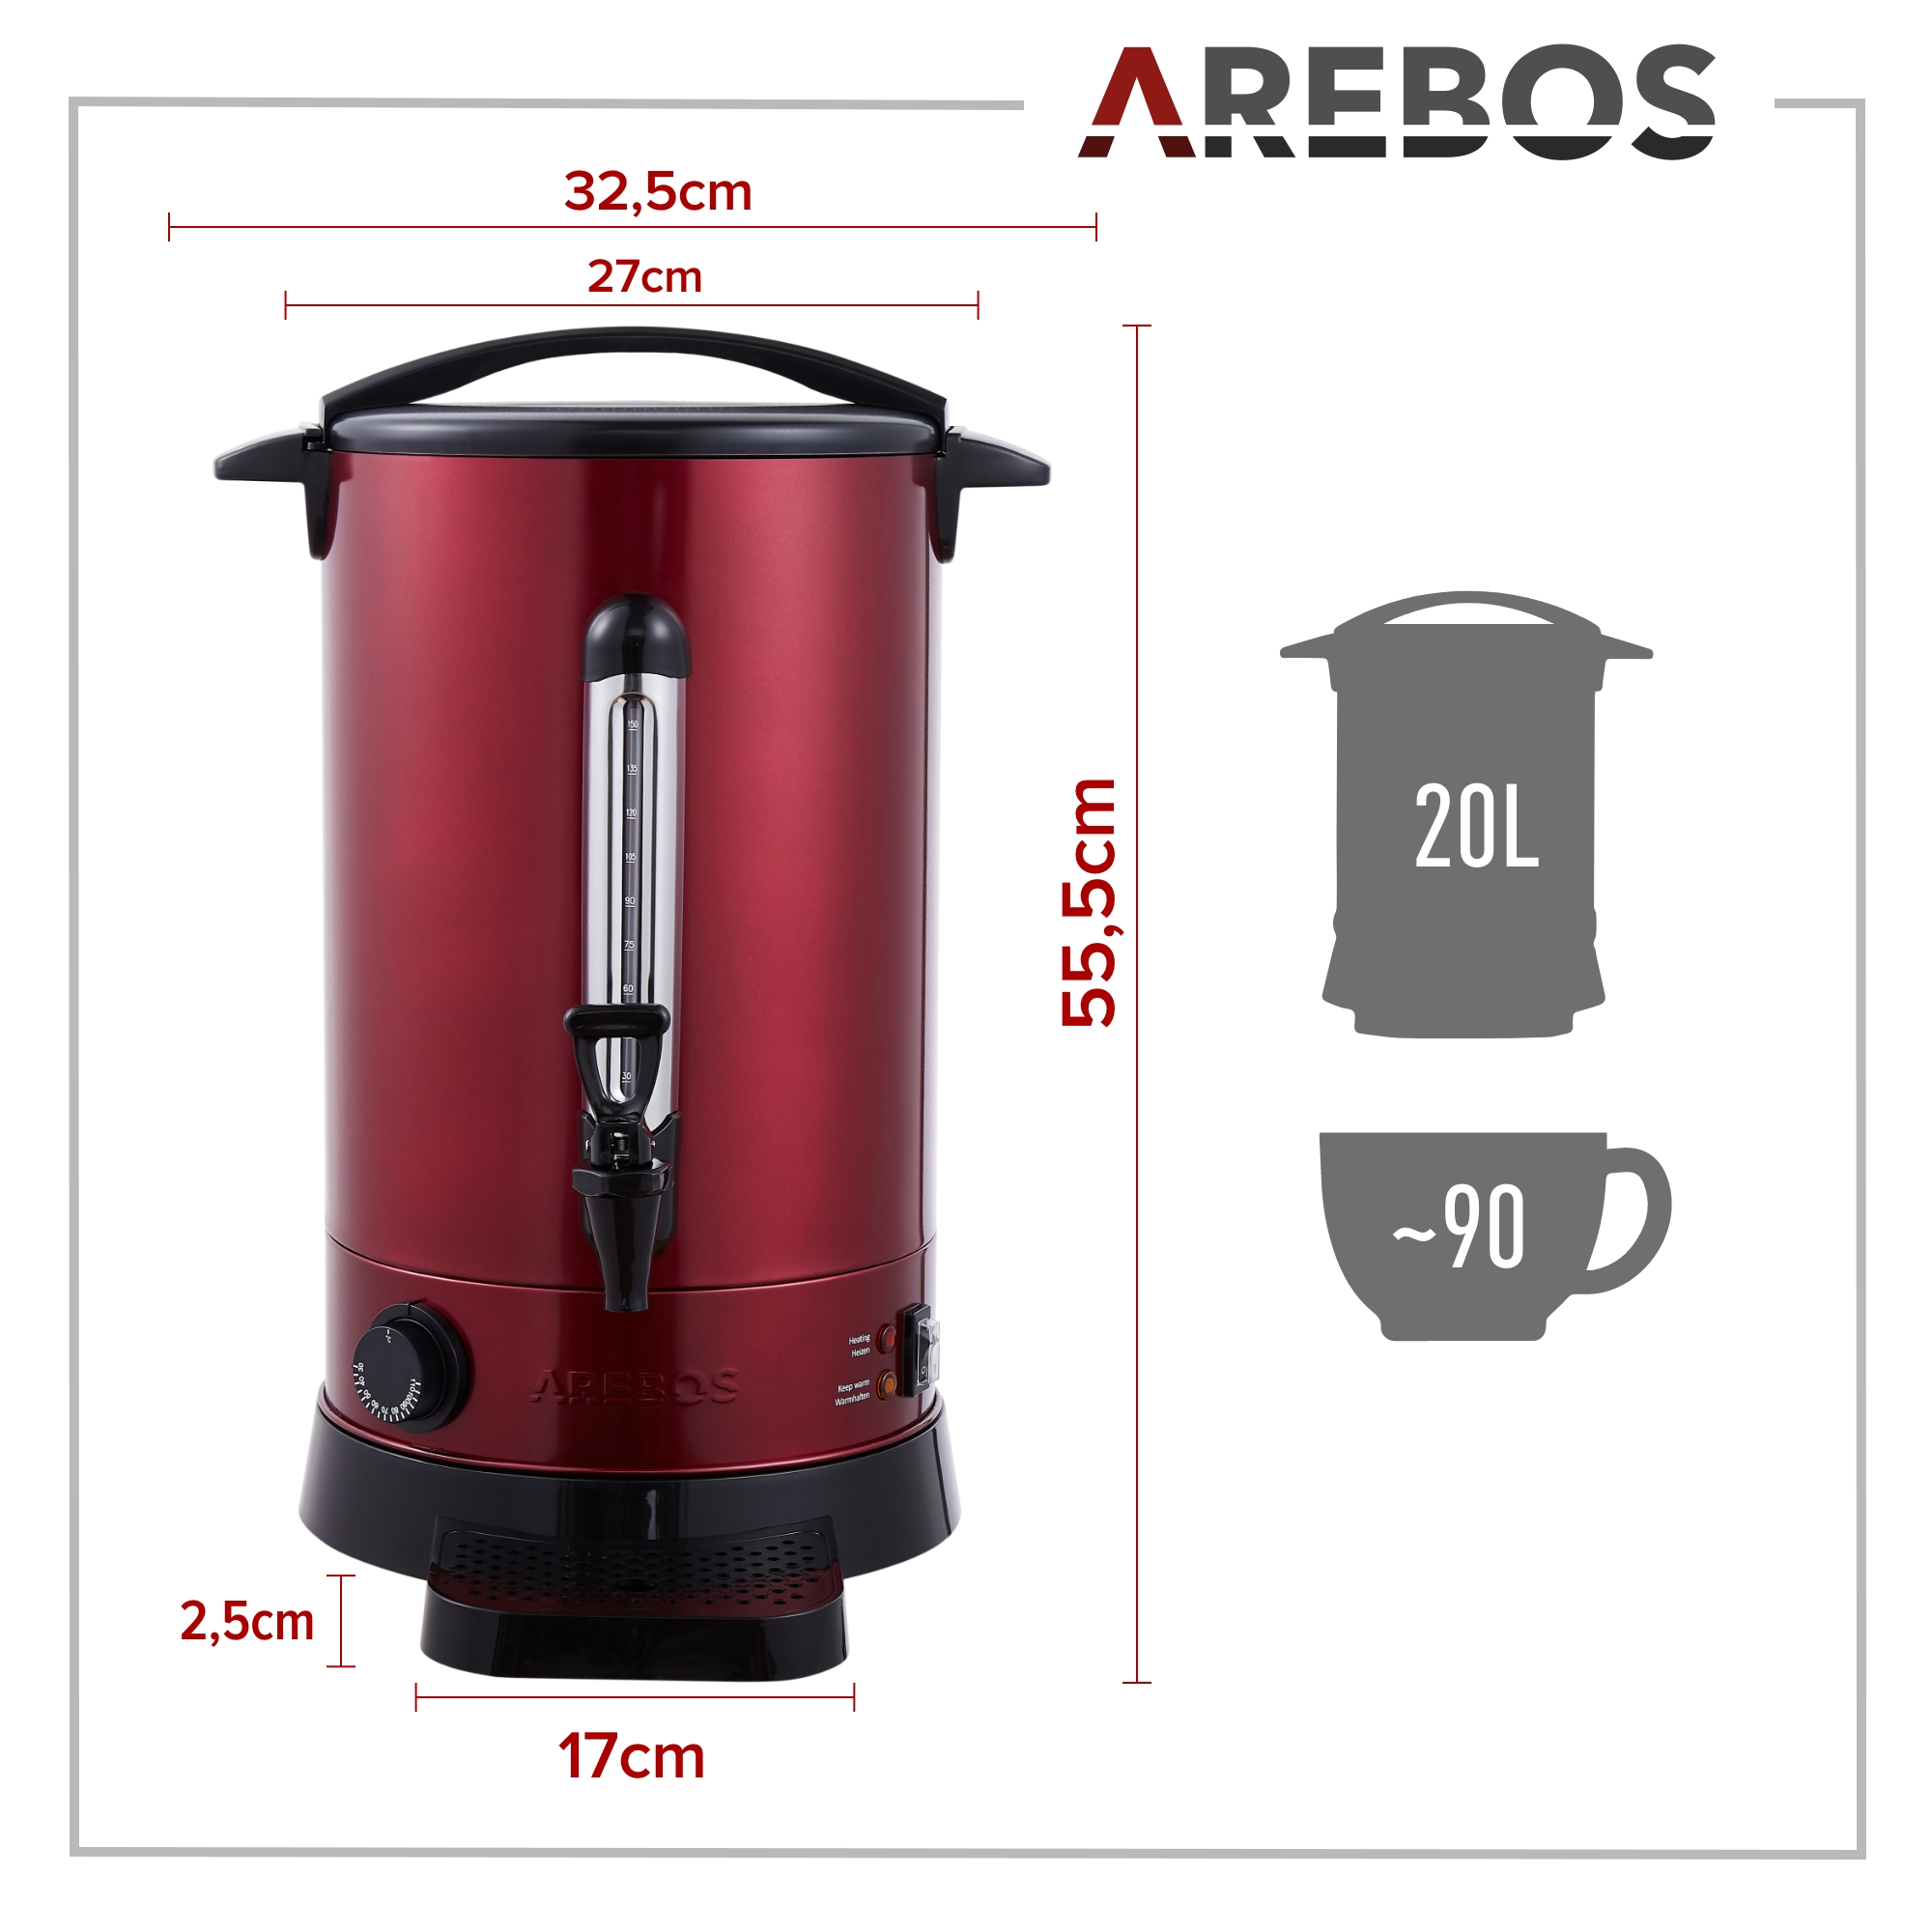 AREBOS mit Thermostat Watt) 20L (1650 Glühweinkocher